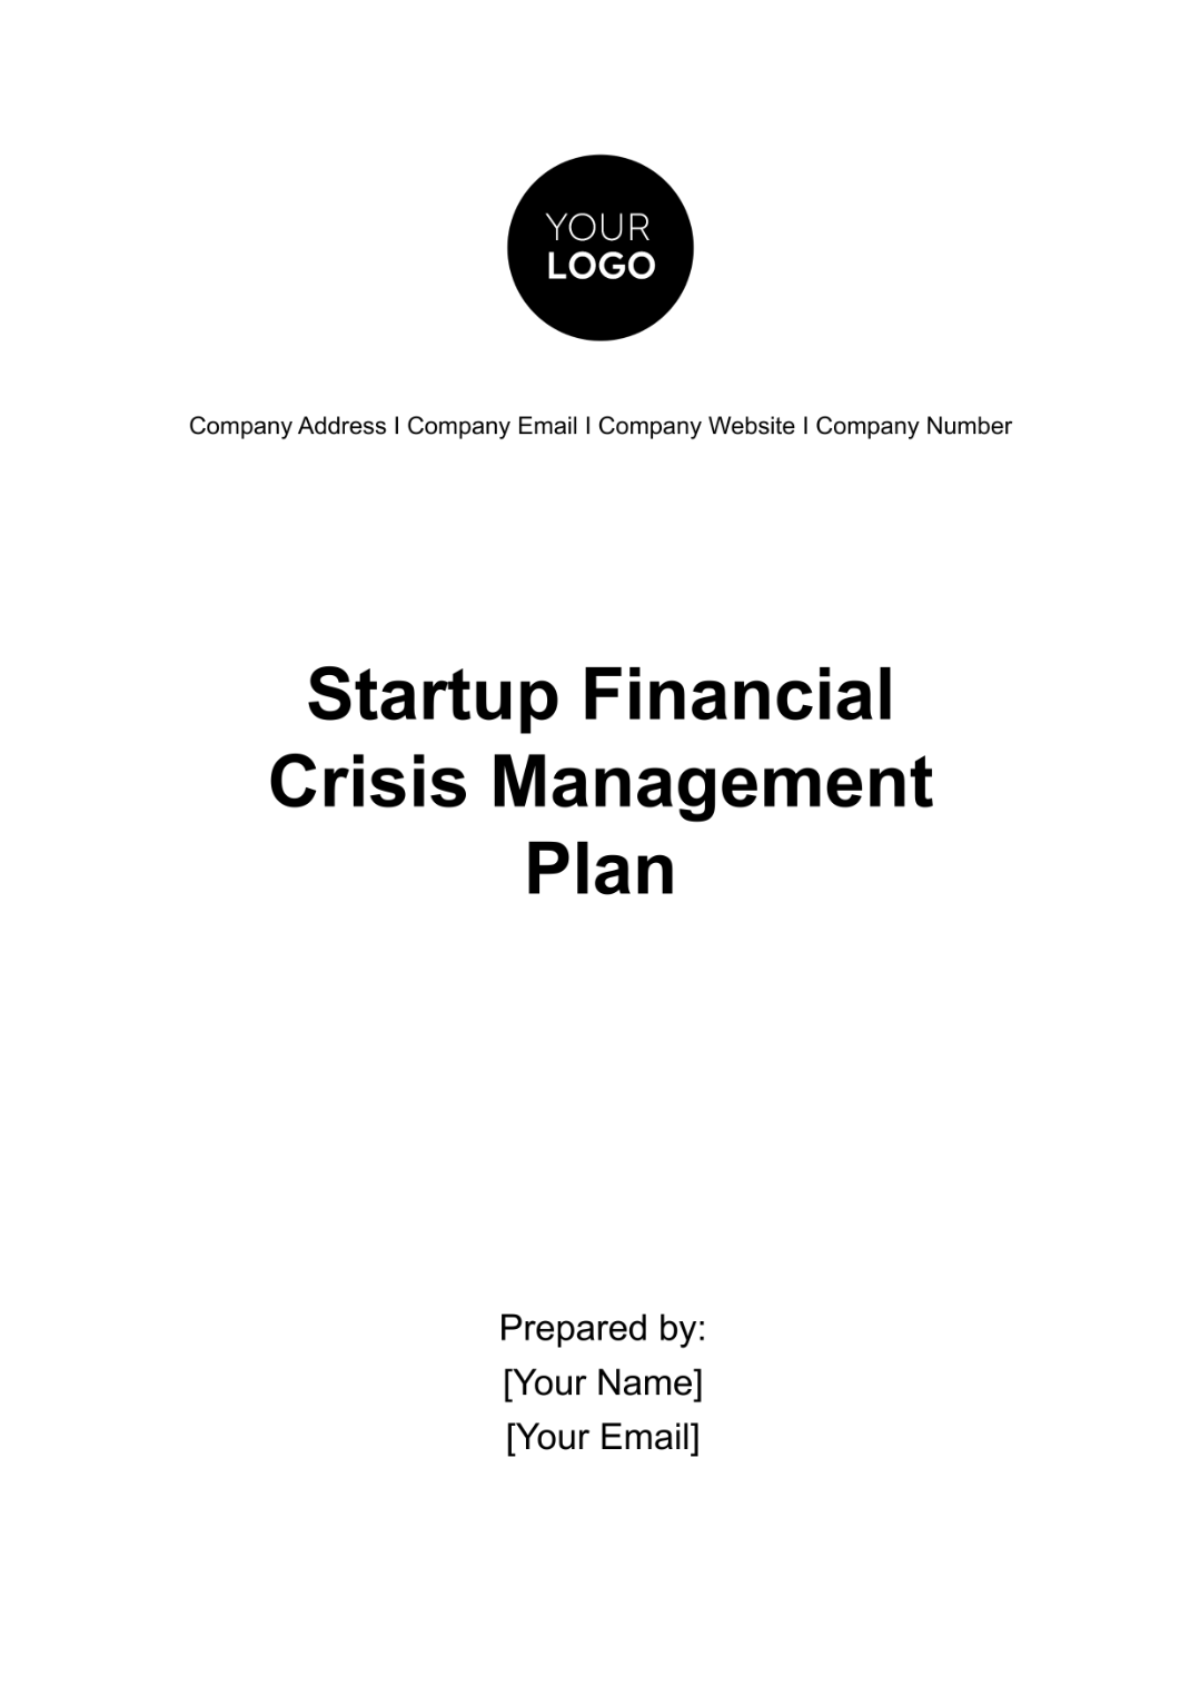 Startup Financial Crisis Management Plan Template